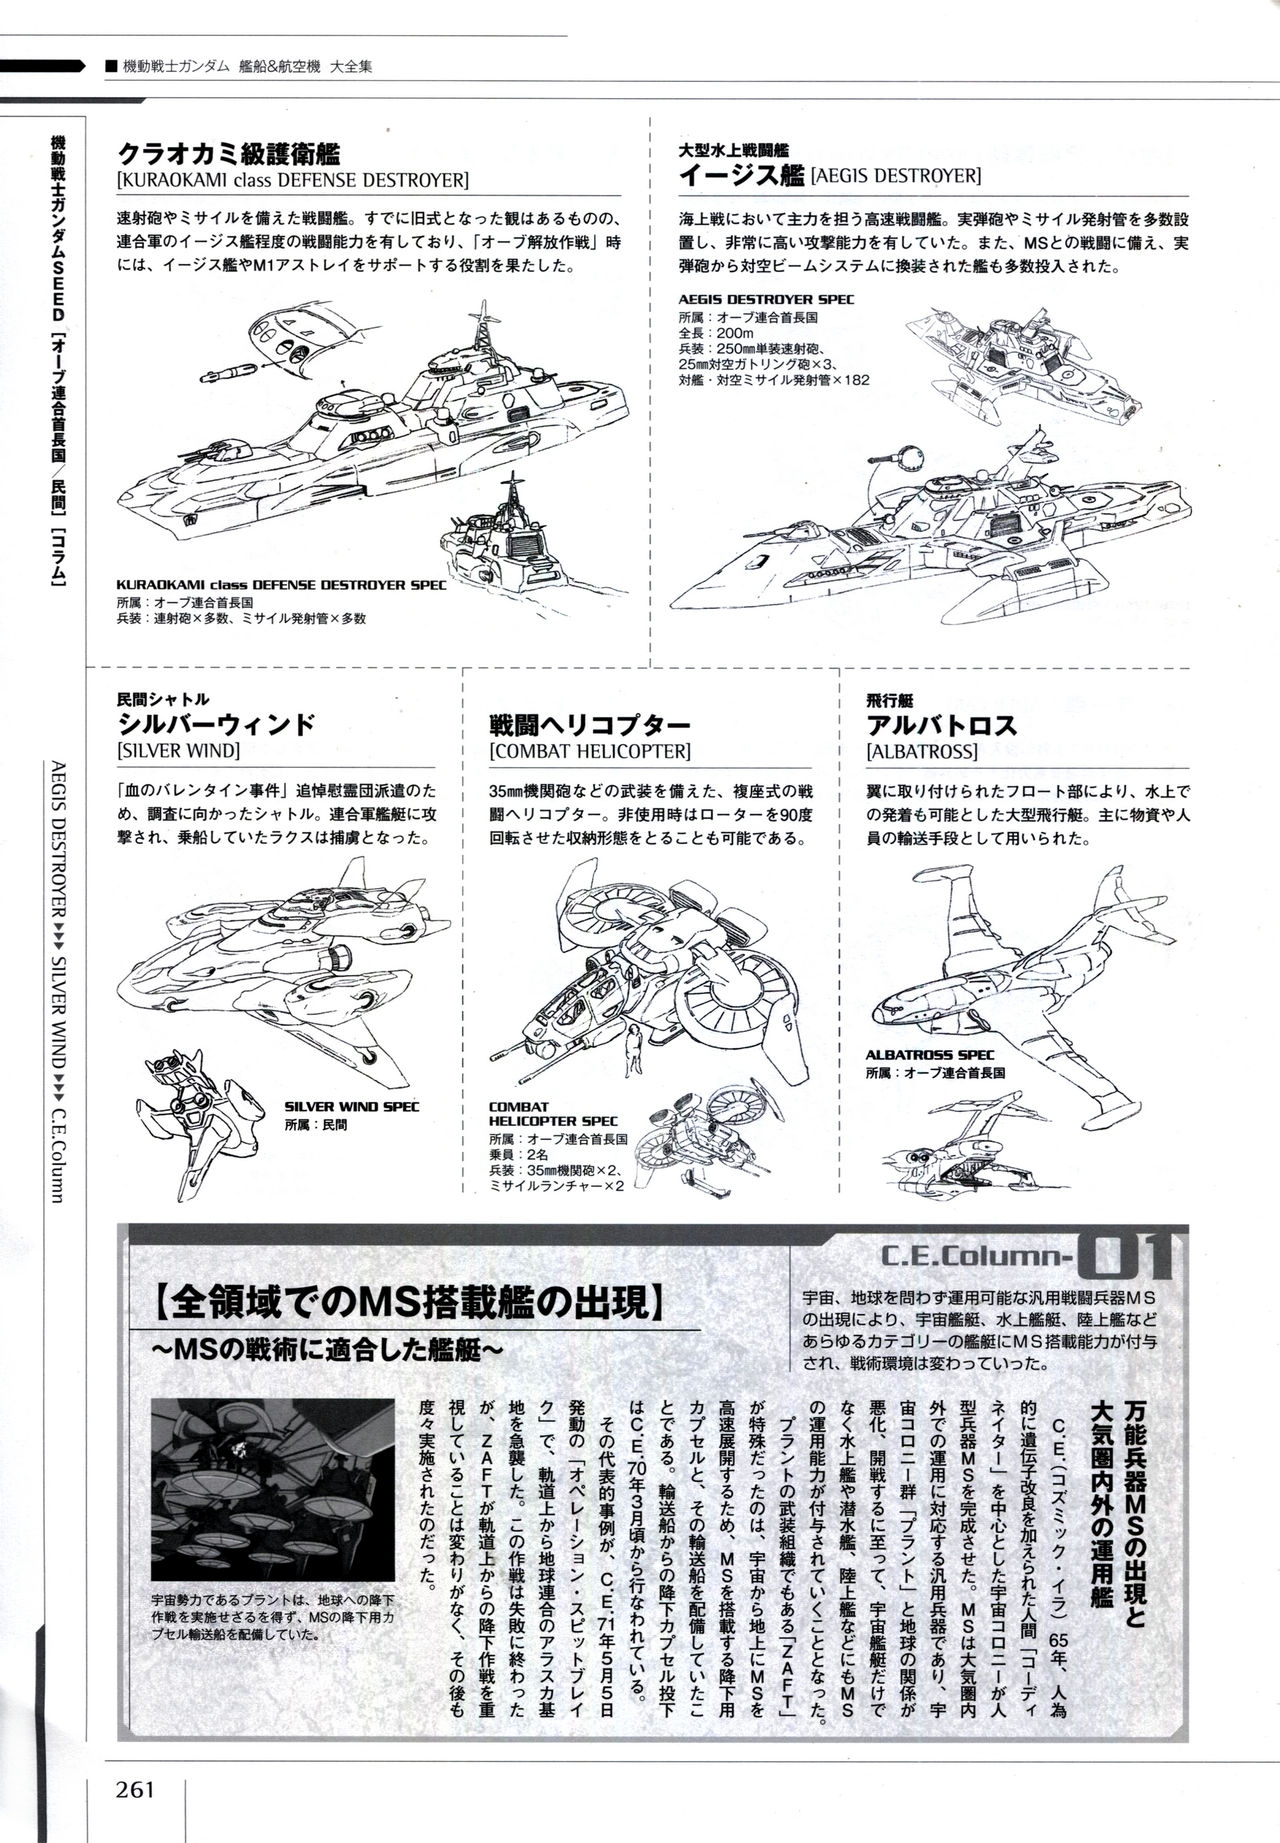 Mobile Suit Gundam - Ship & Aerospace Plane Encyclopedia - Revised Edition 266